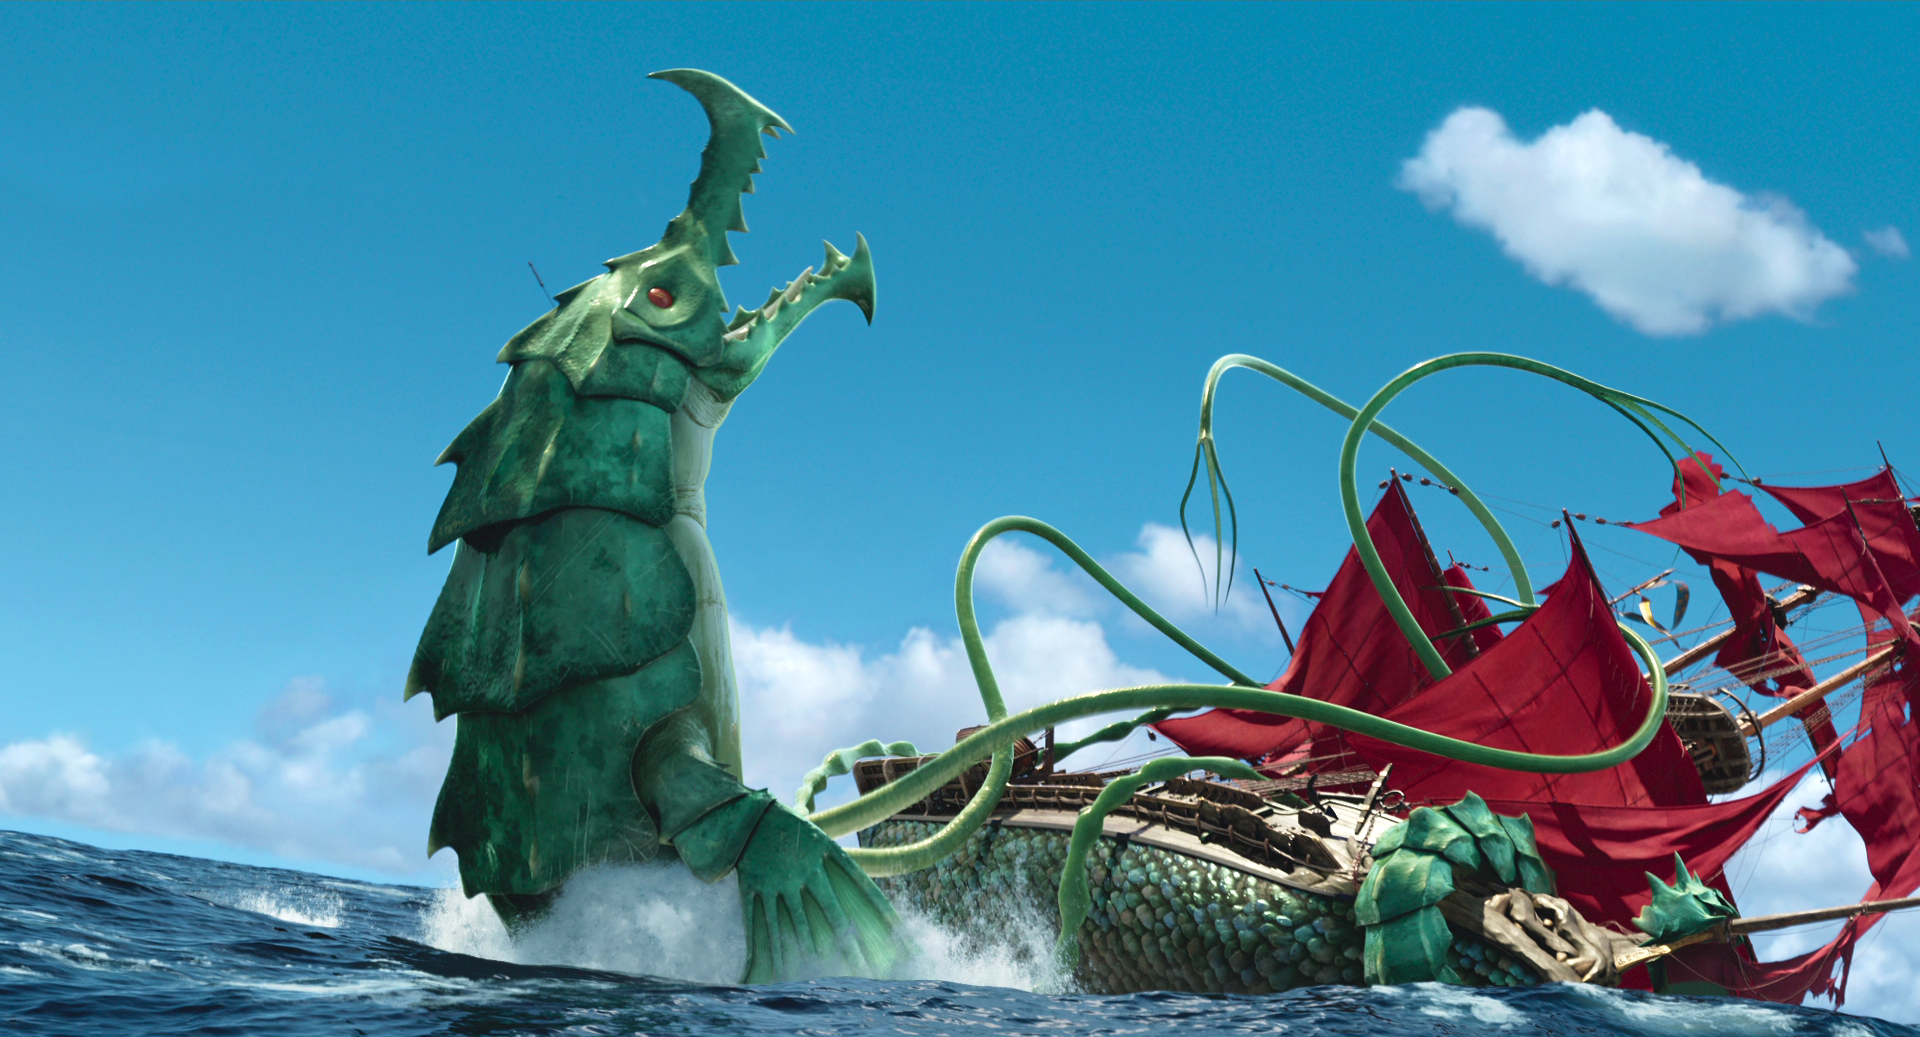 A sea monster named Brickleback battles a sailing ship in Netflix’s The Sea Beast